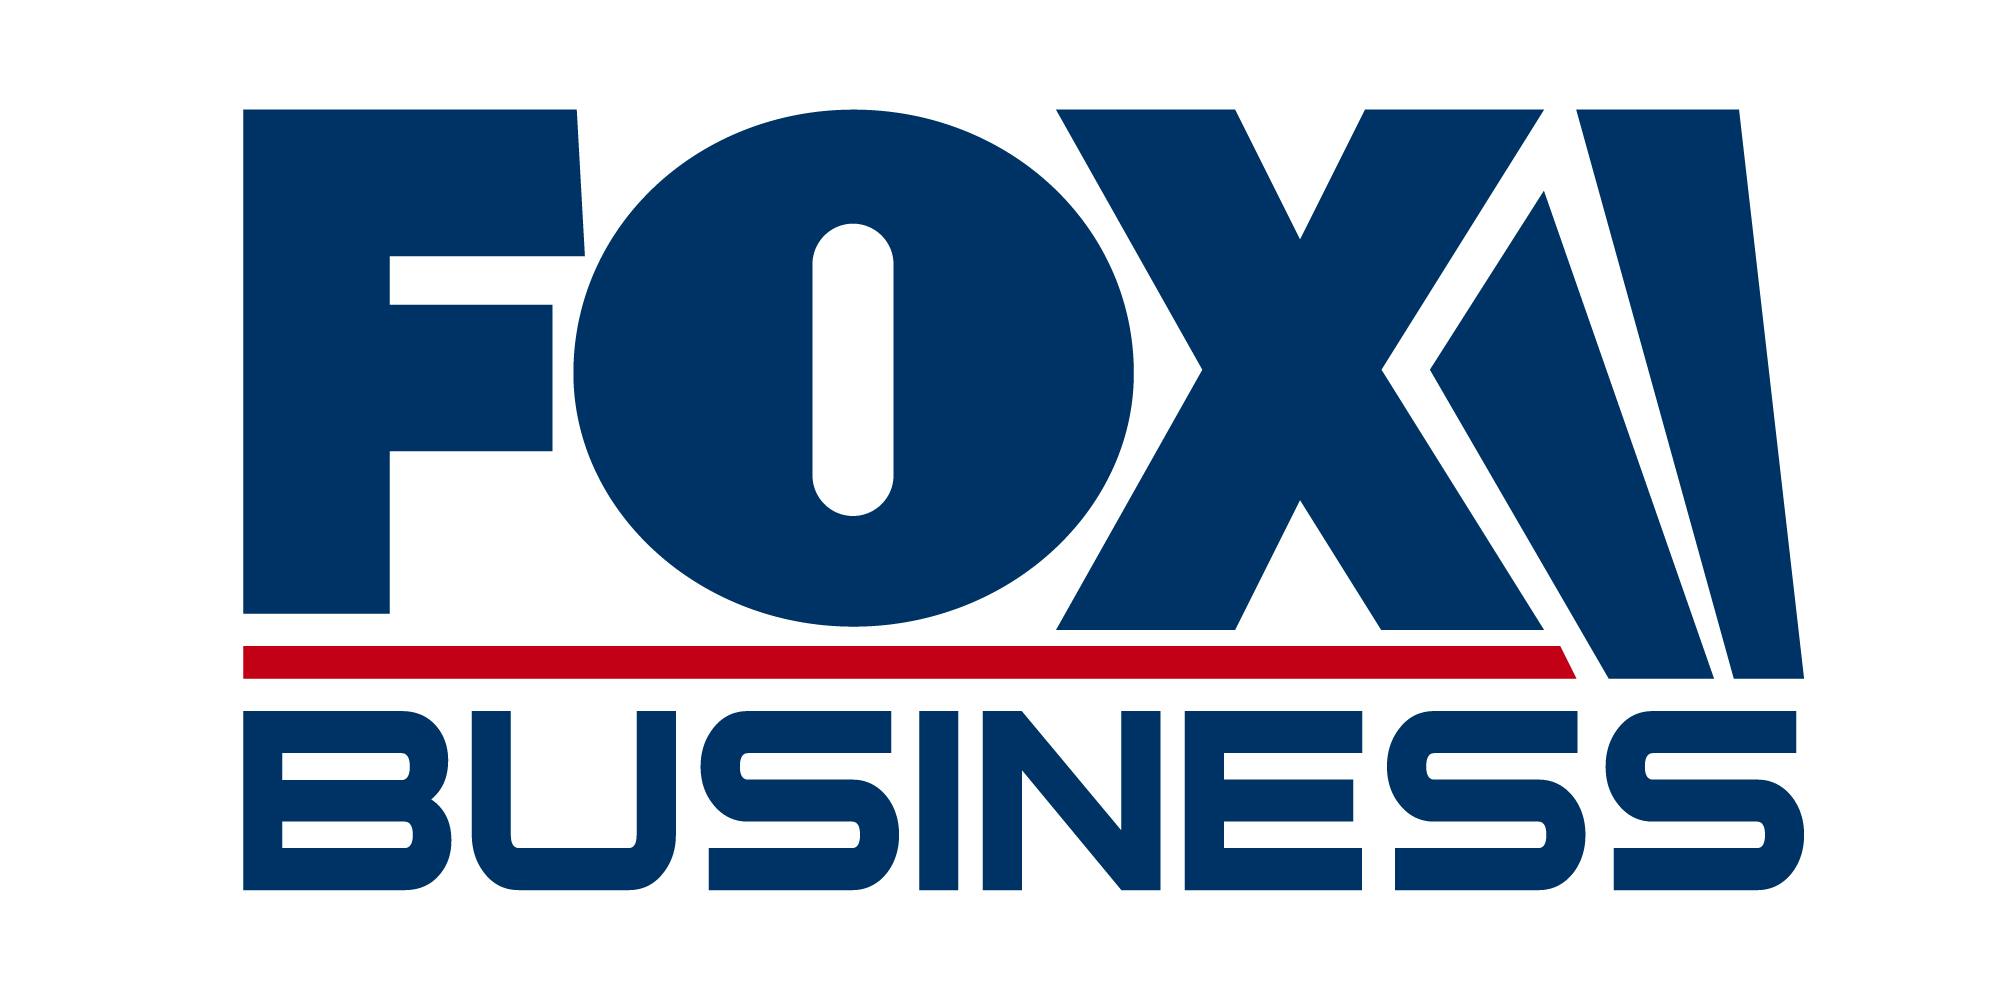 How To Stream Fox Business Network 7 Ways To Watch Online